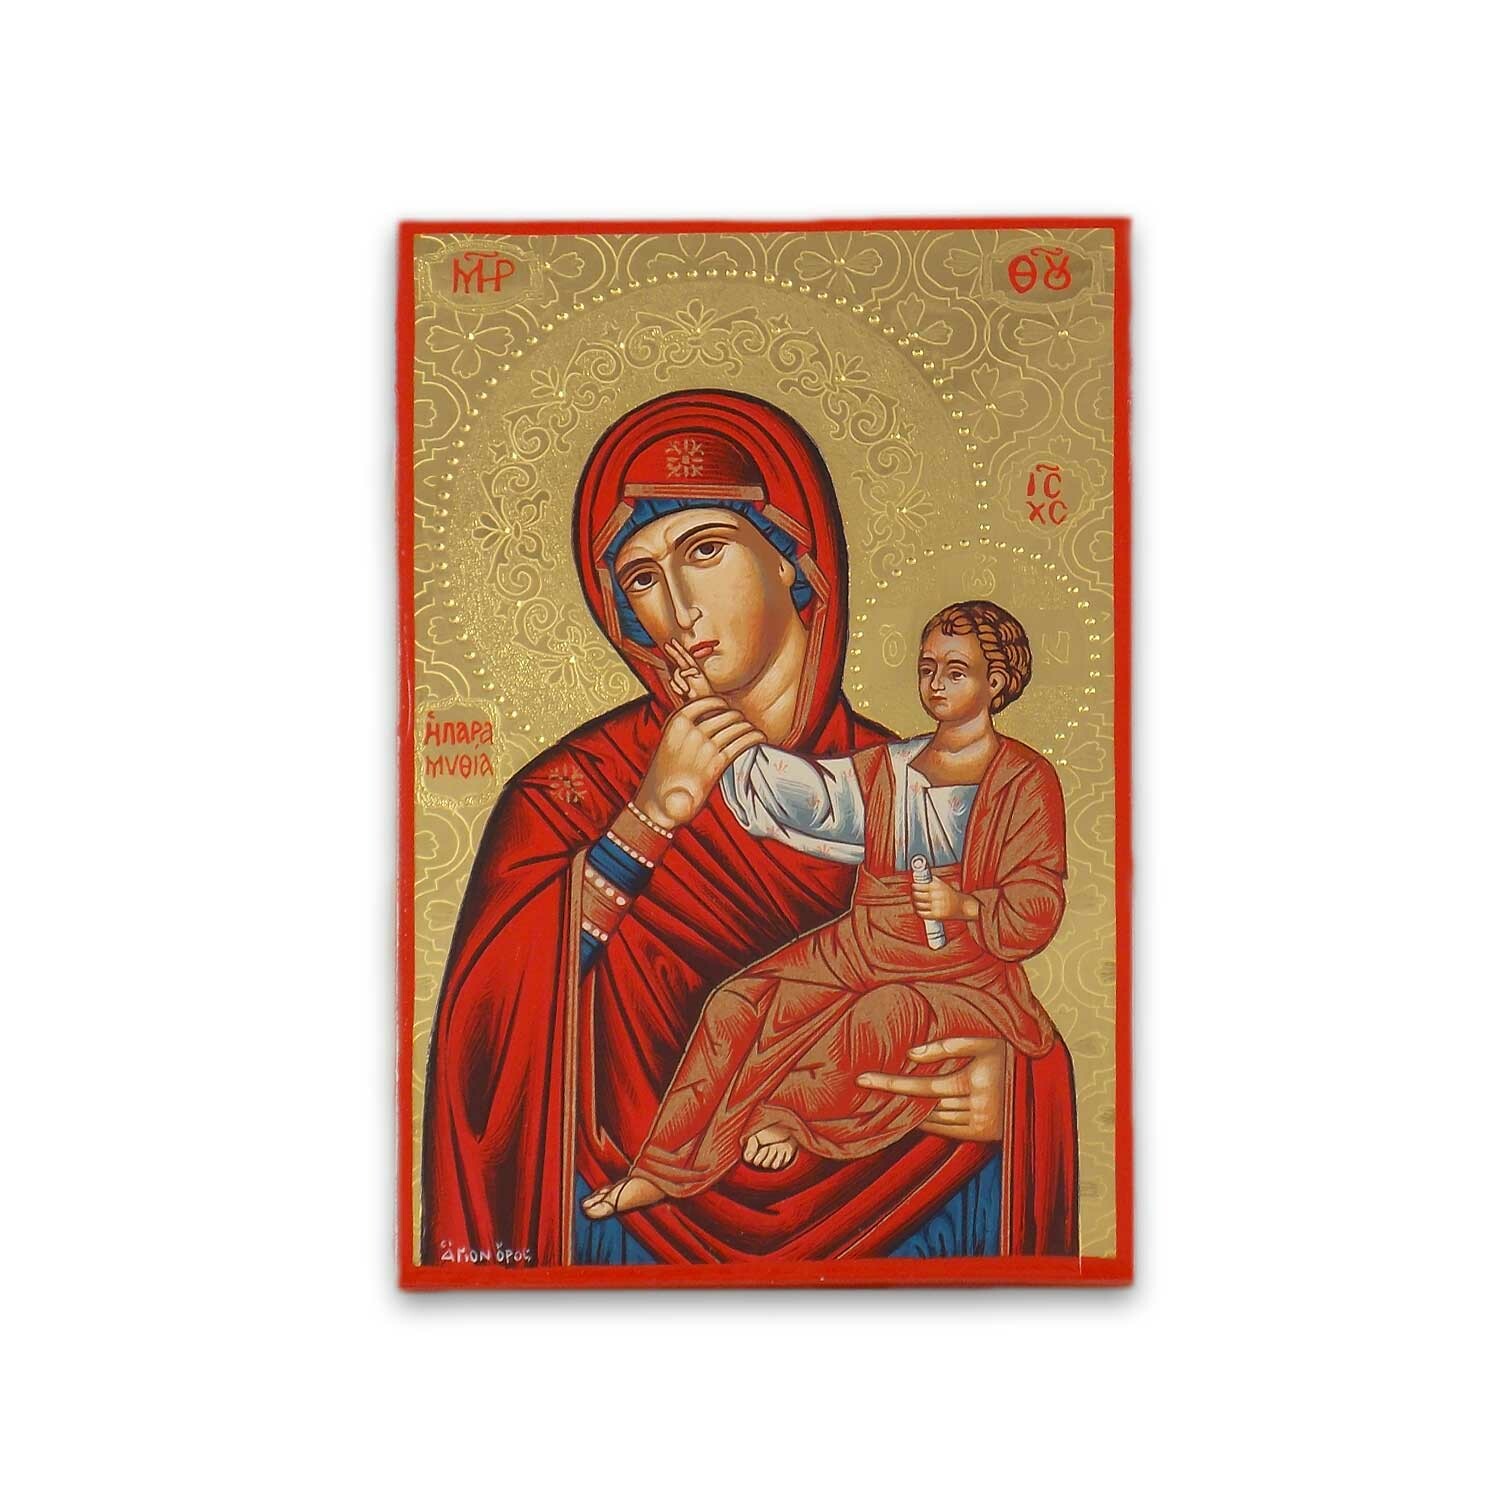 Virgin Mary Paramythia